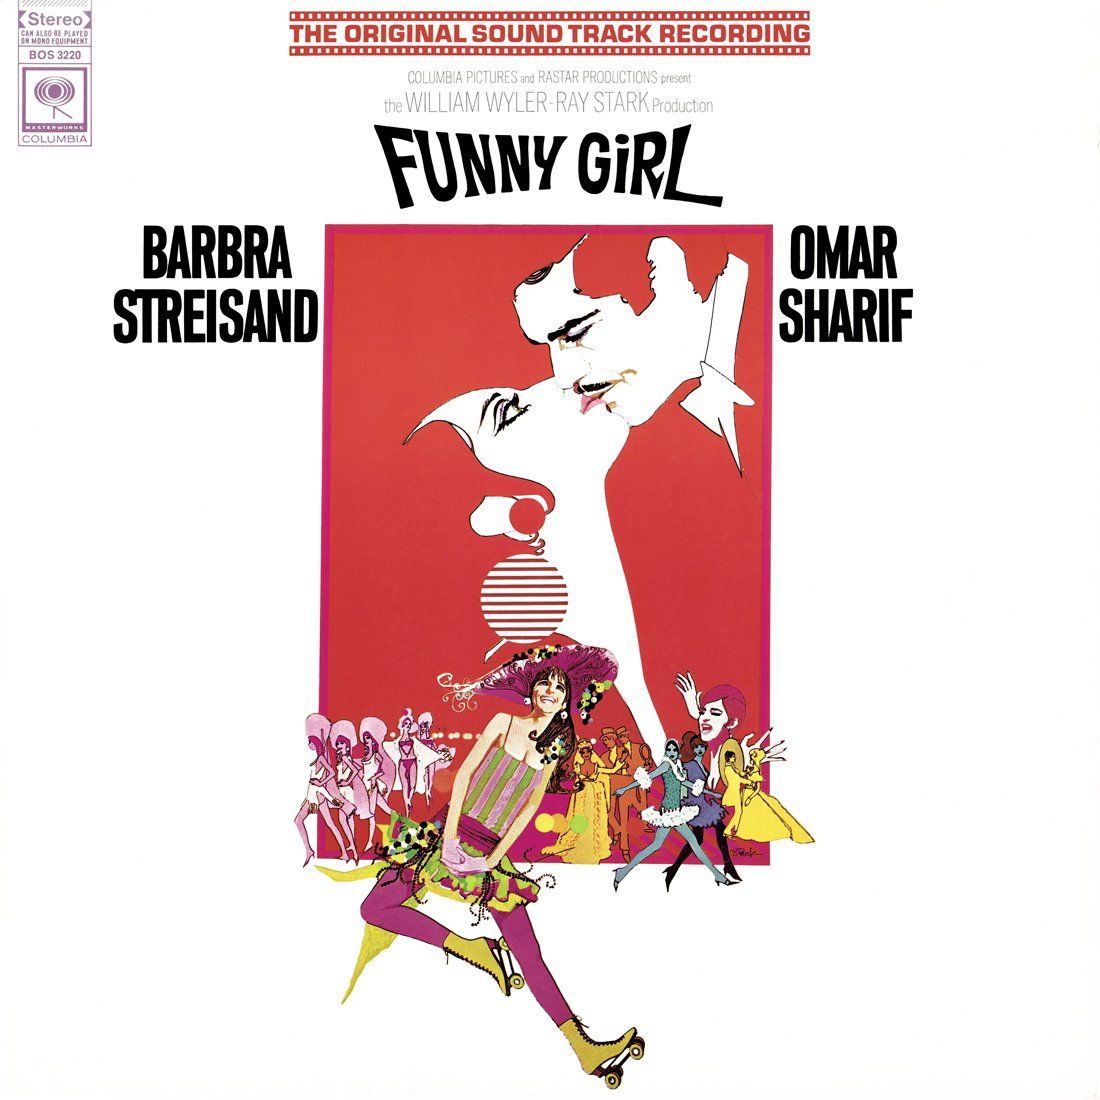 Funny Girl Soundtrack Album cover